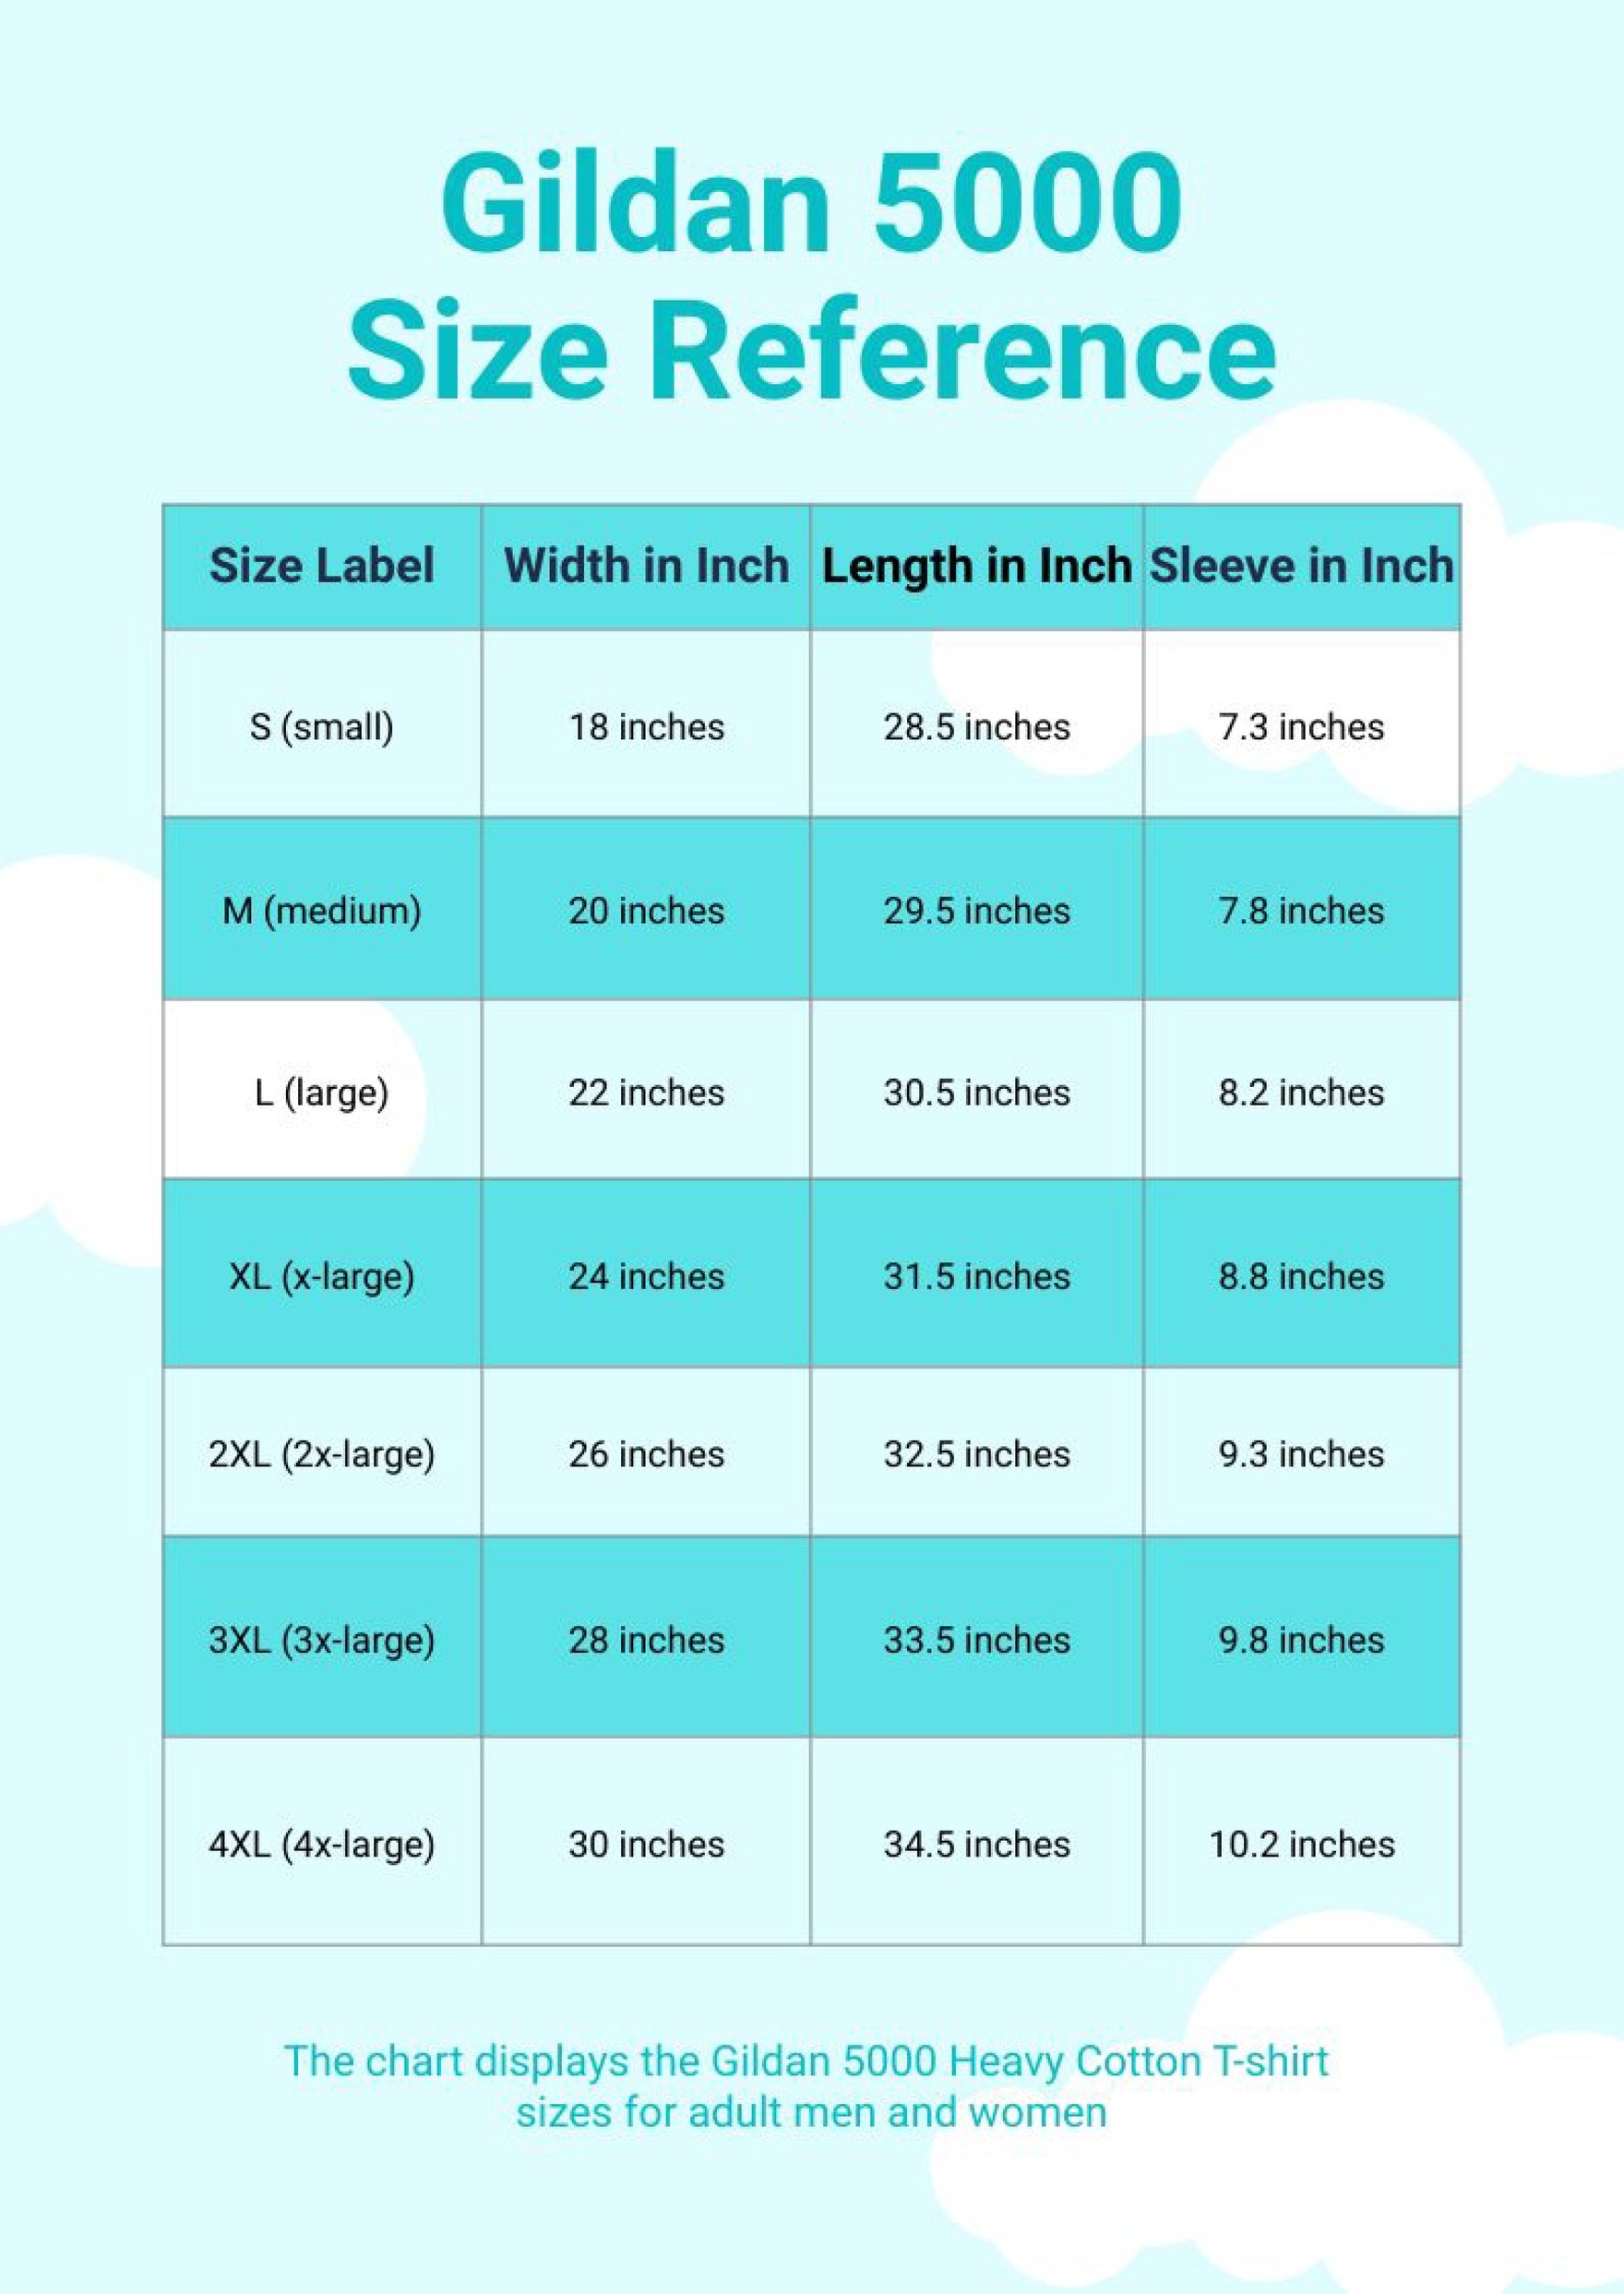 Gildan 5000 Size Chart in PDF, Illustrator